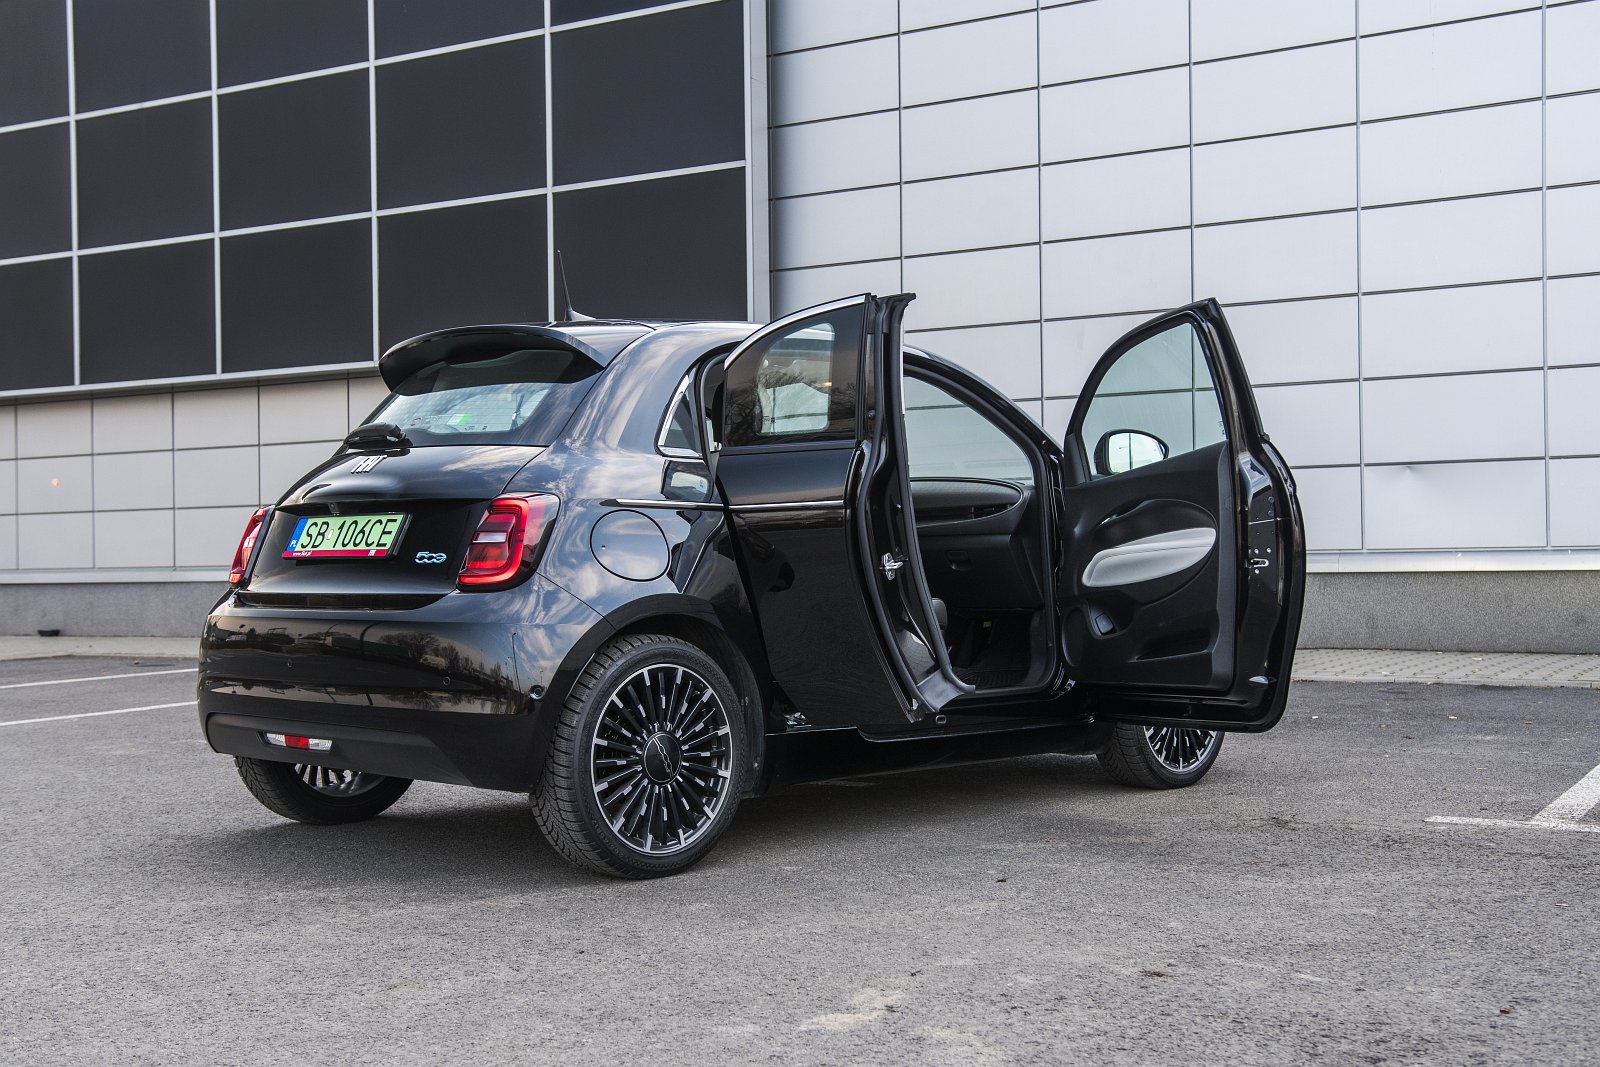 Fiat 500 3+1 (2022) test